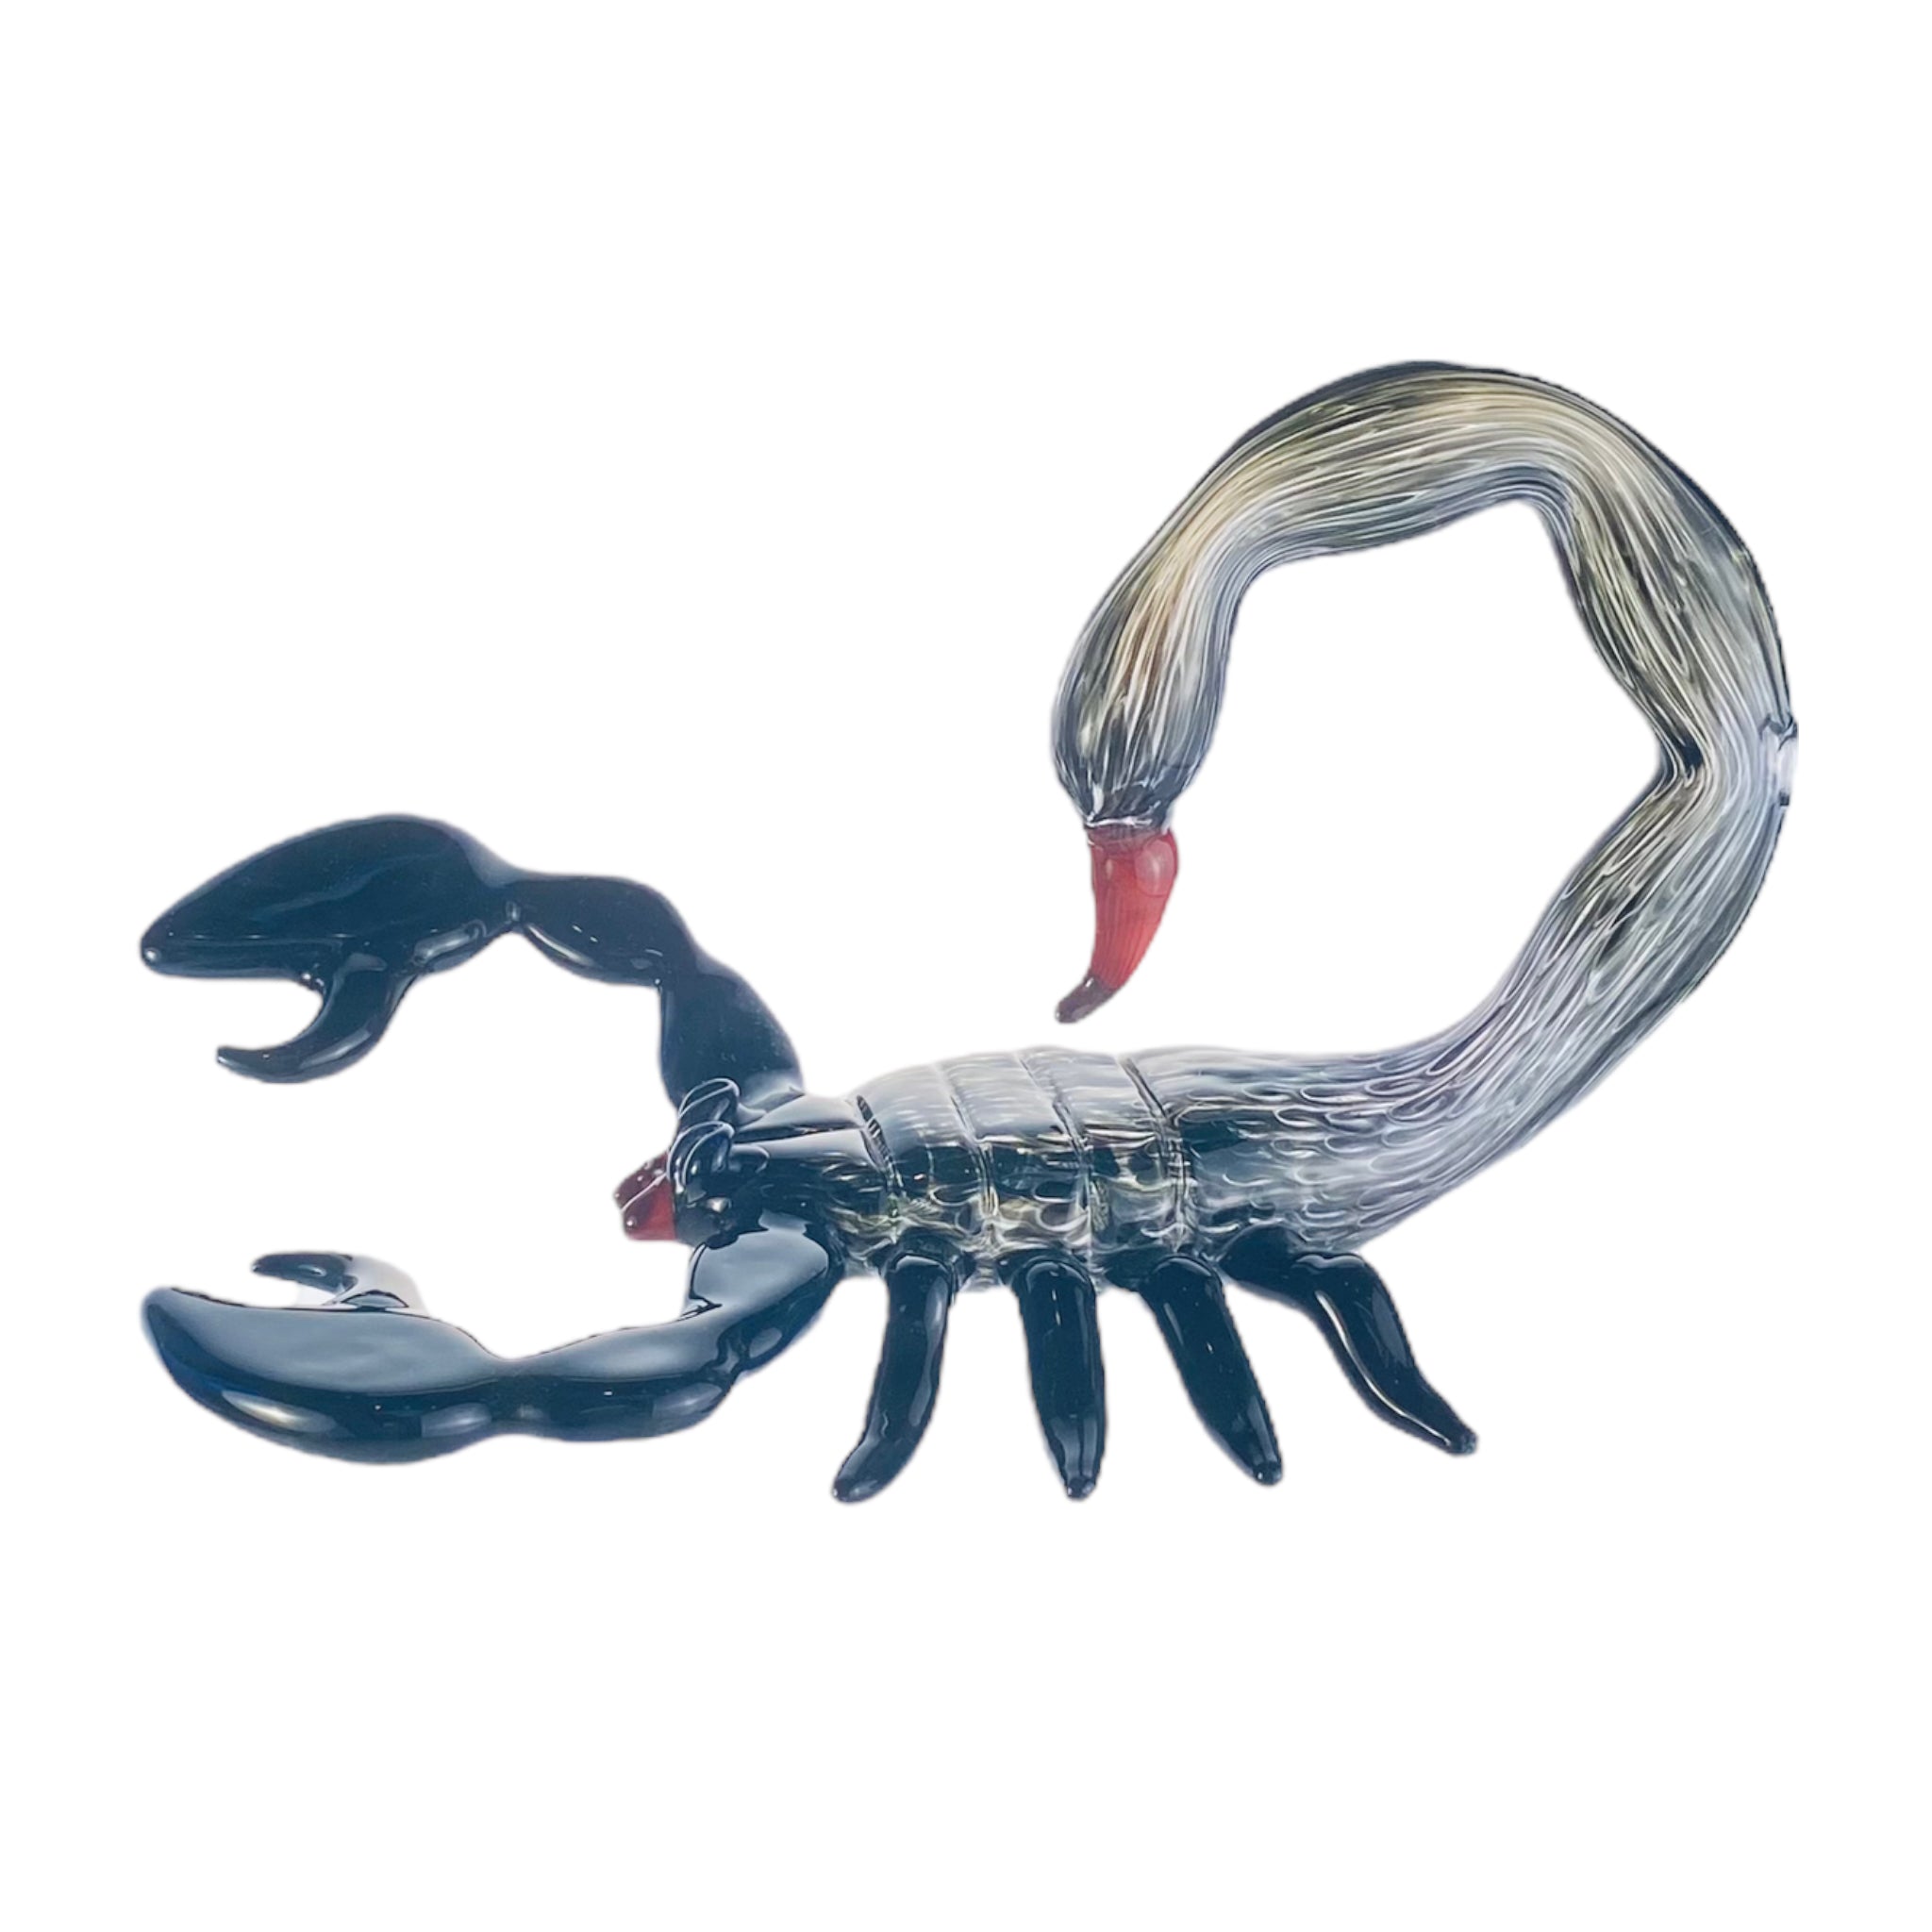 Daniels Glass Art - Glass Large Black Fat Tailed Scorpion Hand Pipe